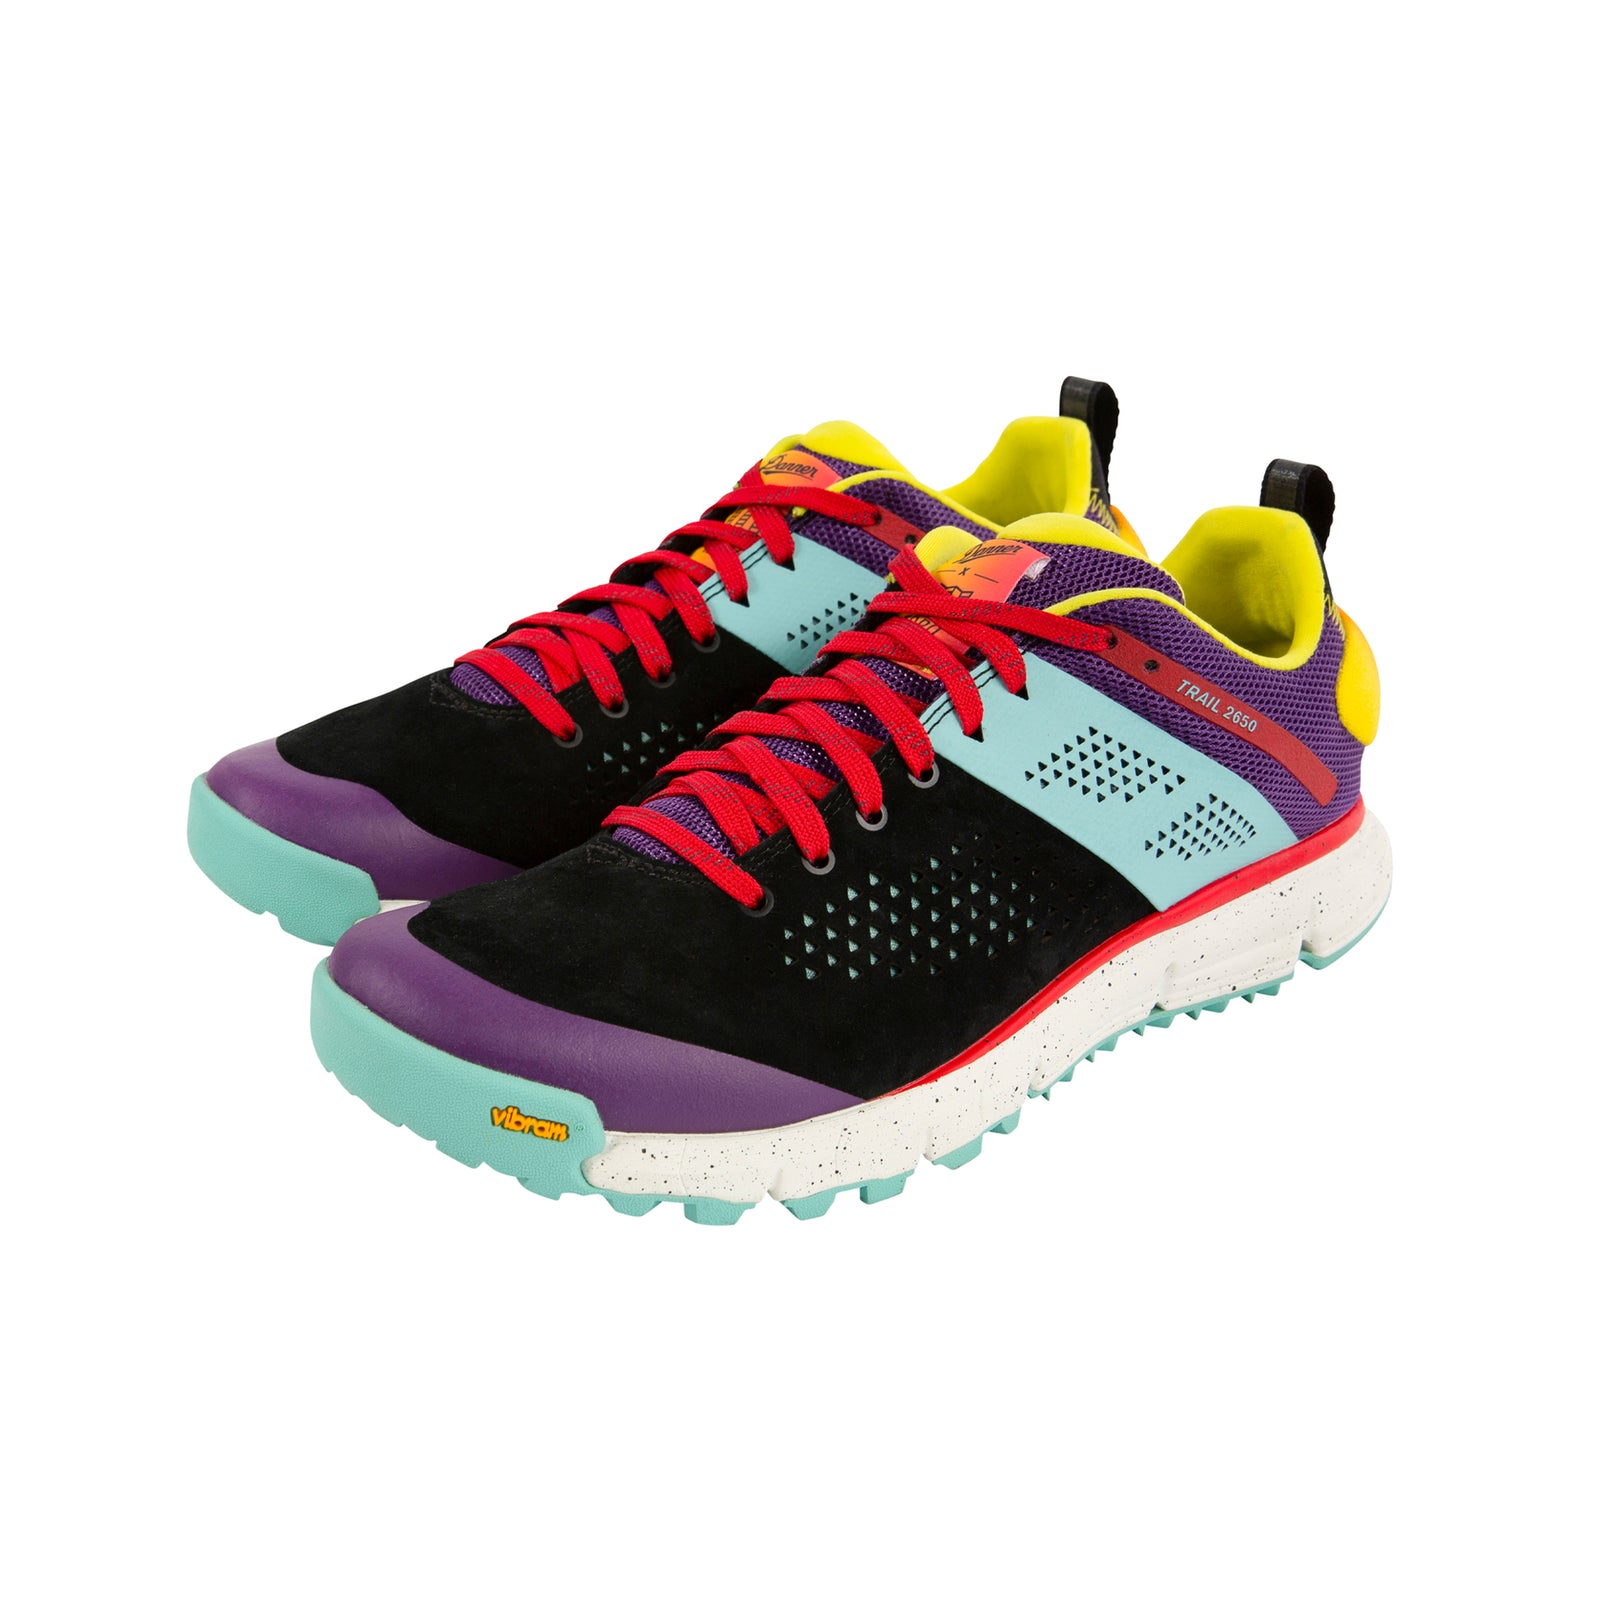 Topo Designs x Danner men's trail running shoe product shot of pair